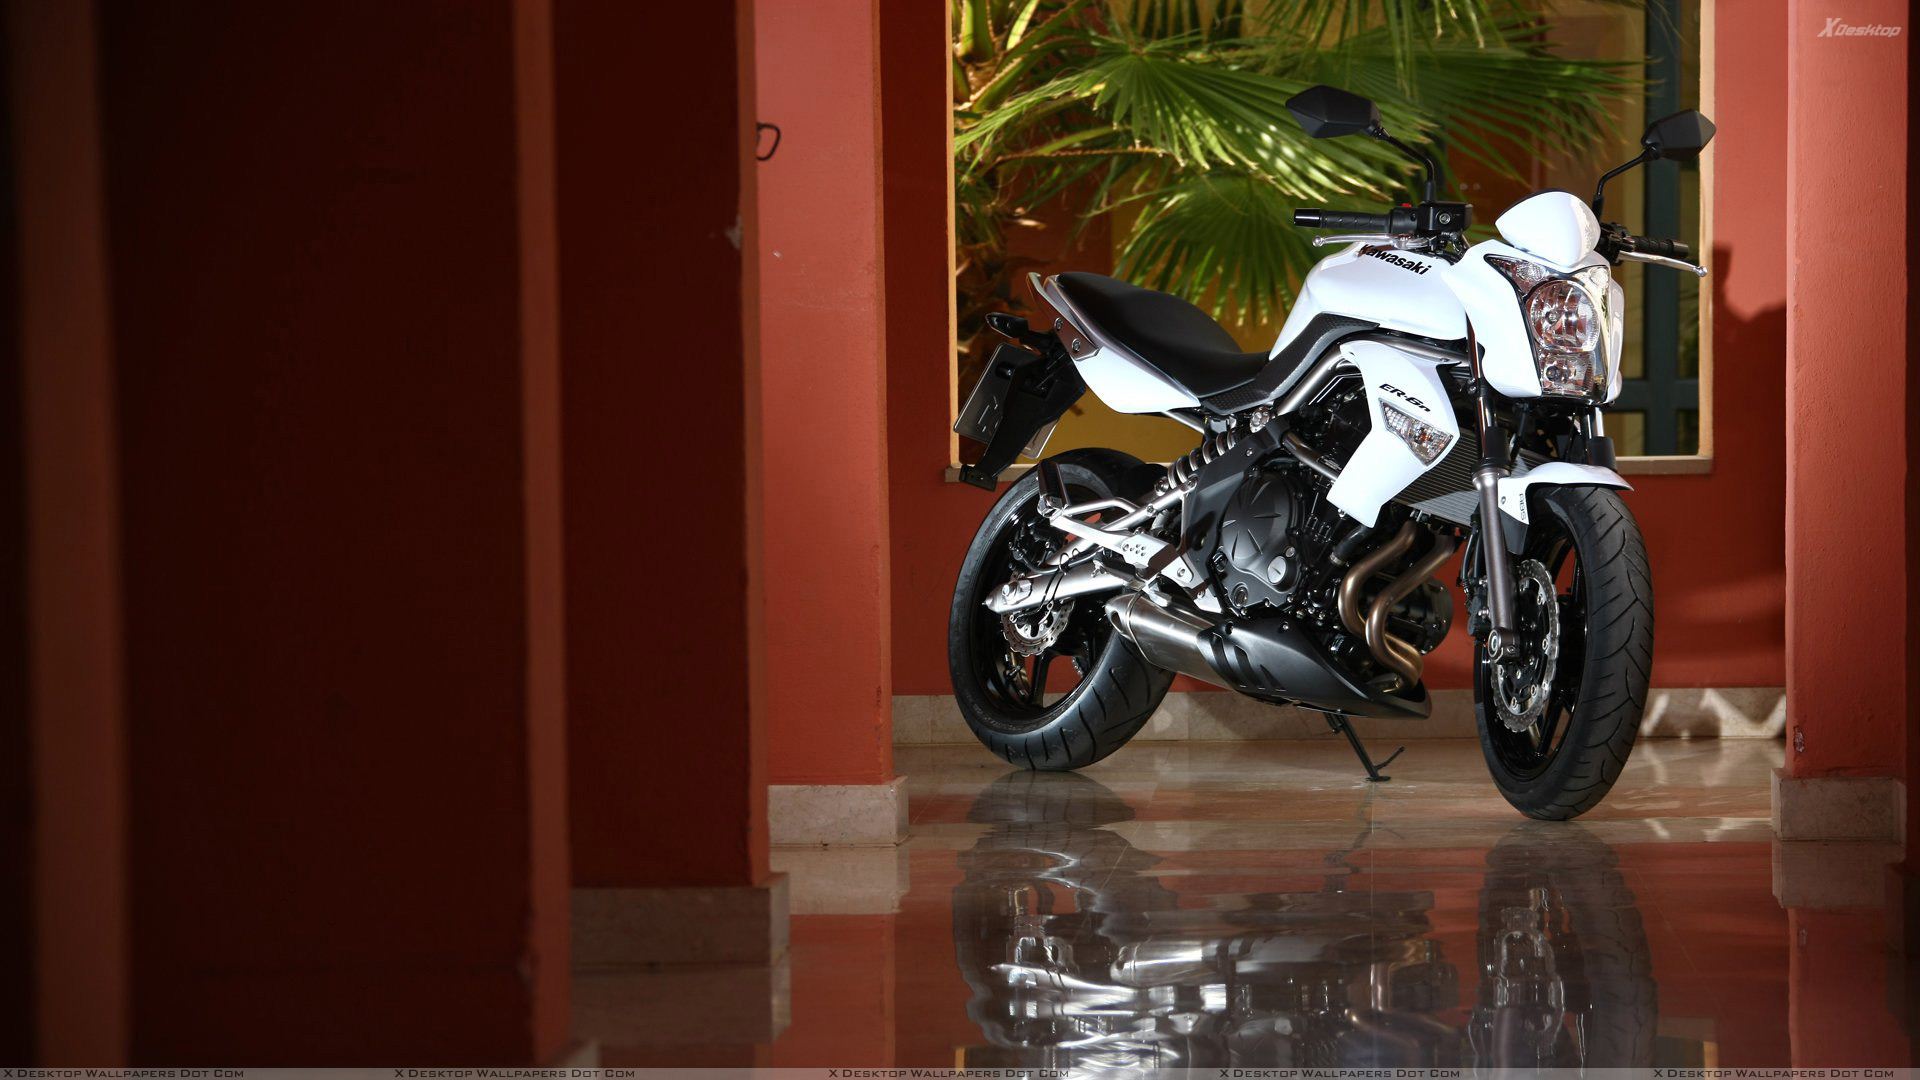 Kawasaki Ninja 650r In White Wallpaper